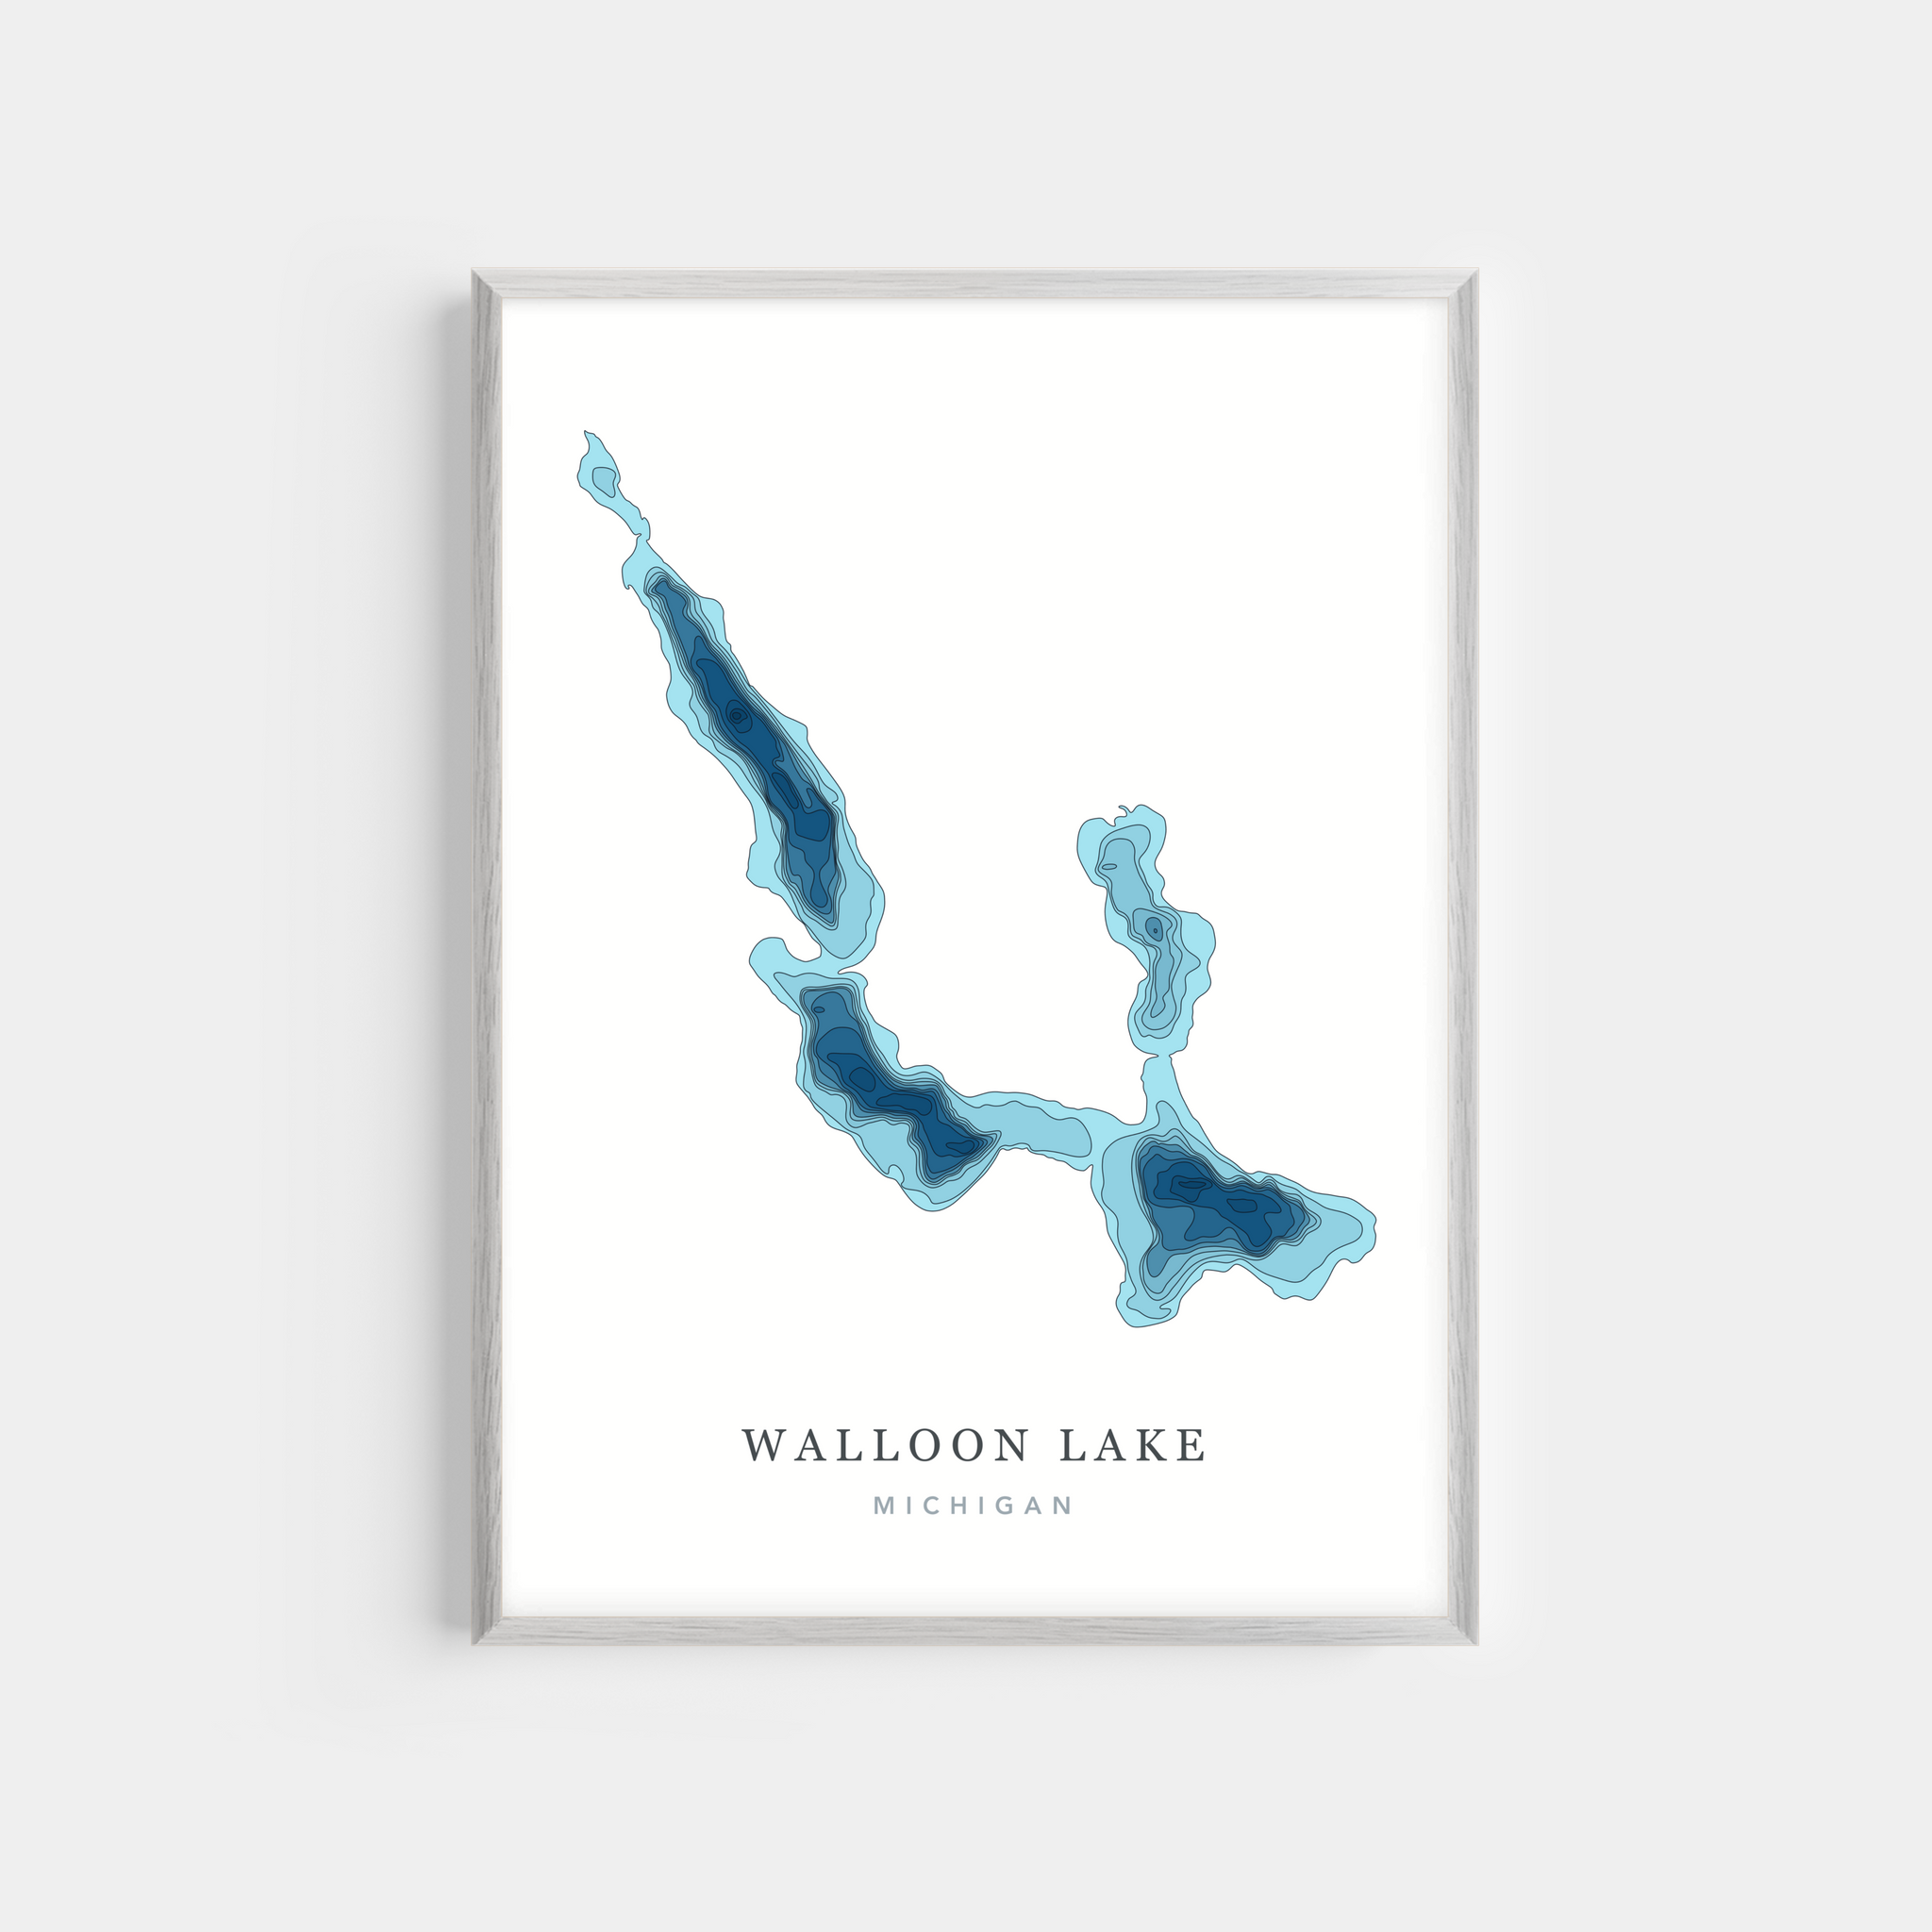 Walloon Lake, Michigan | Photo Print